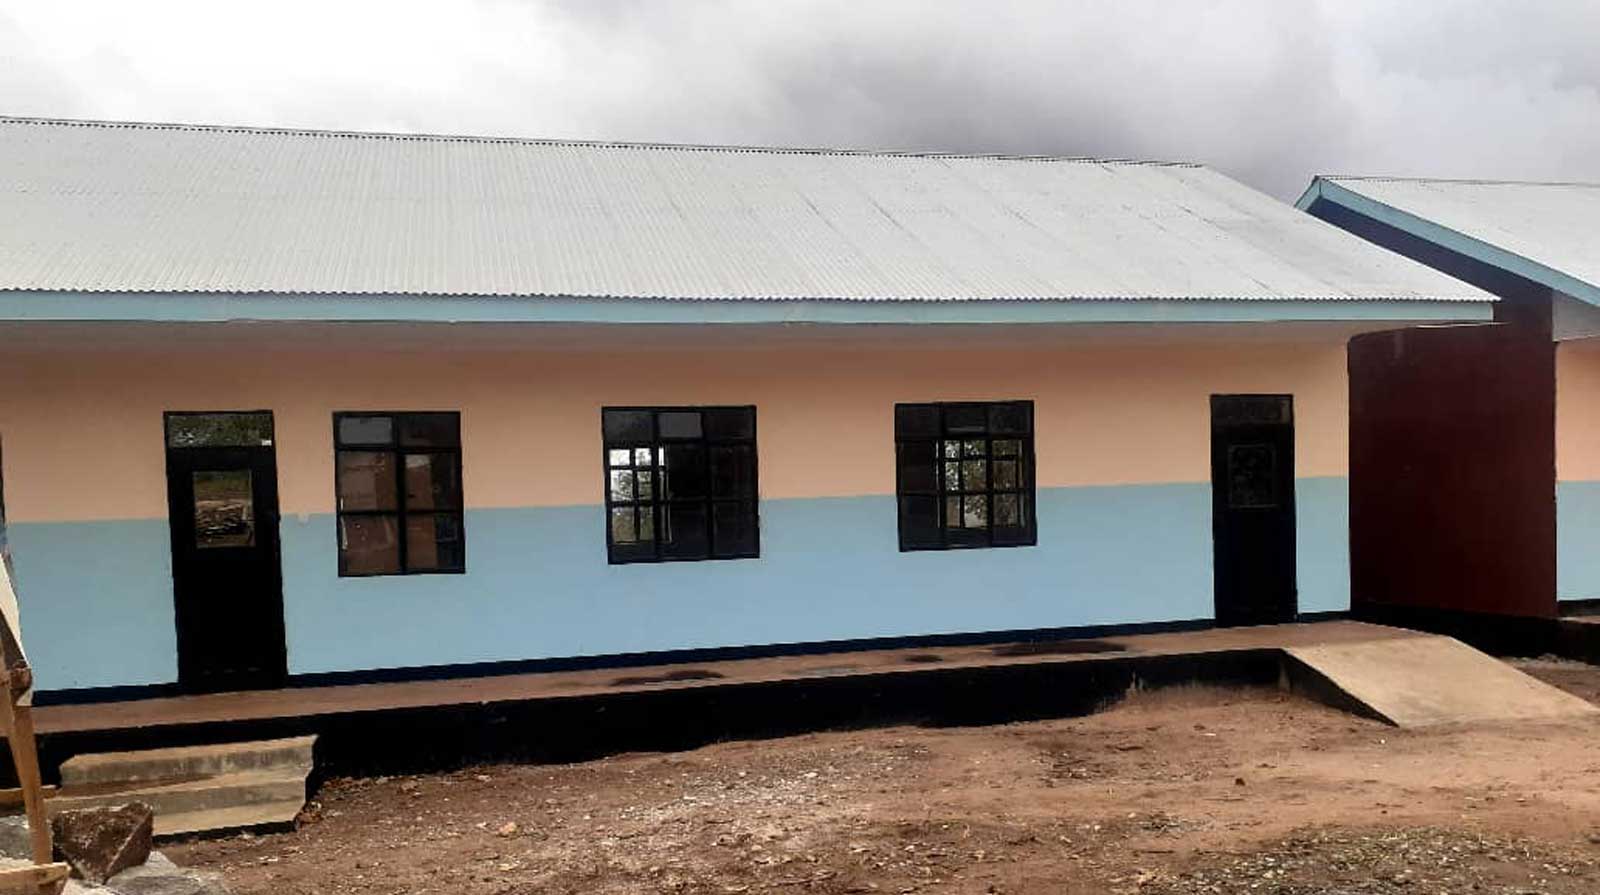 Painted primary school in Msomera village.